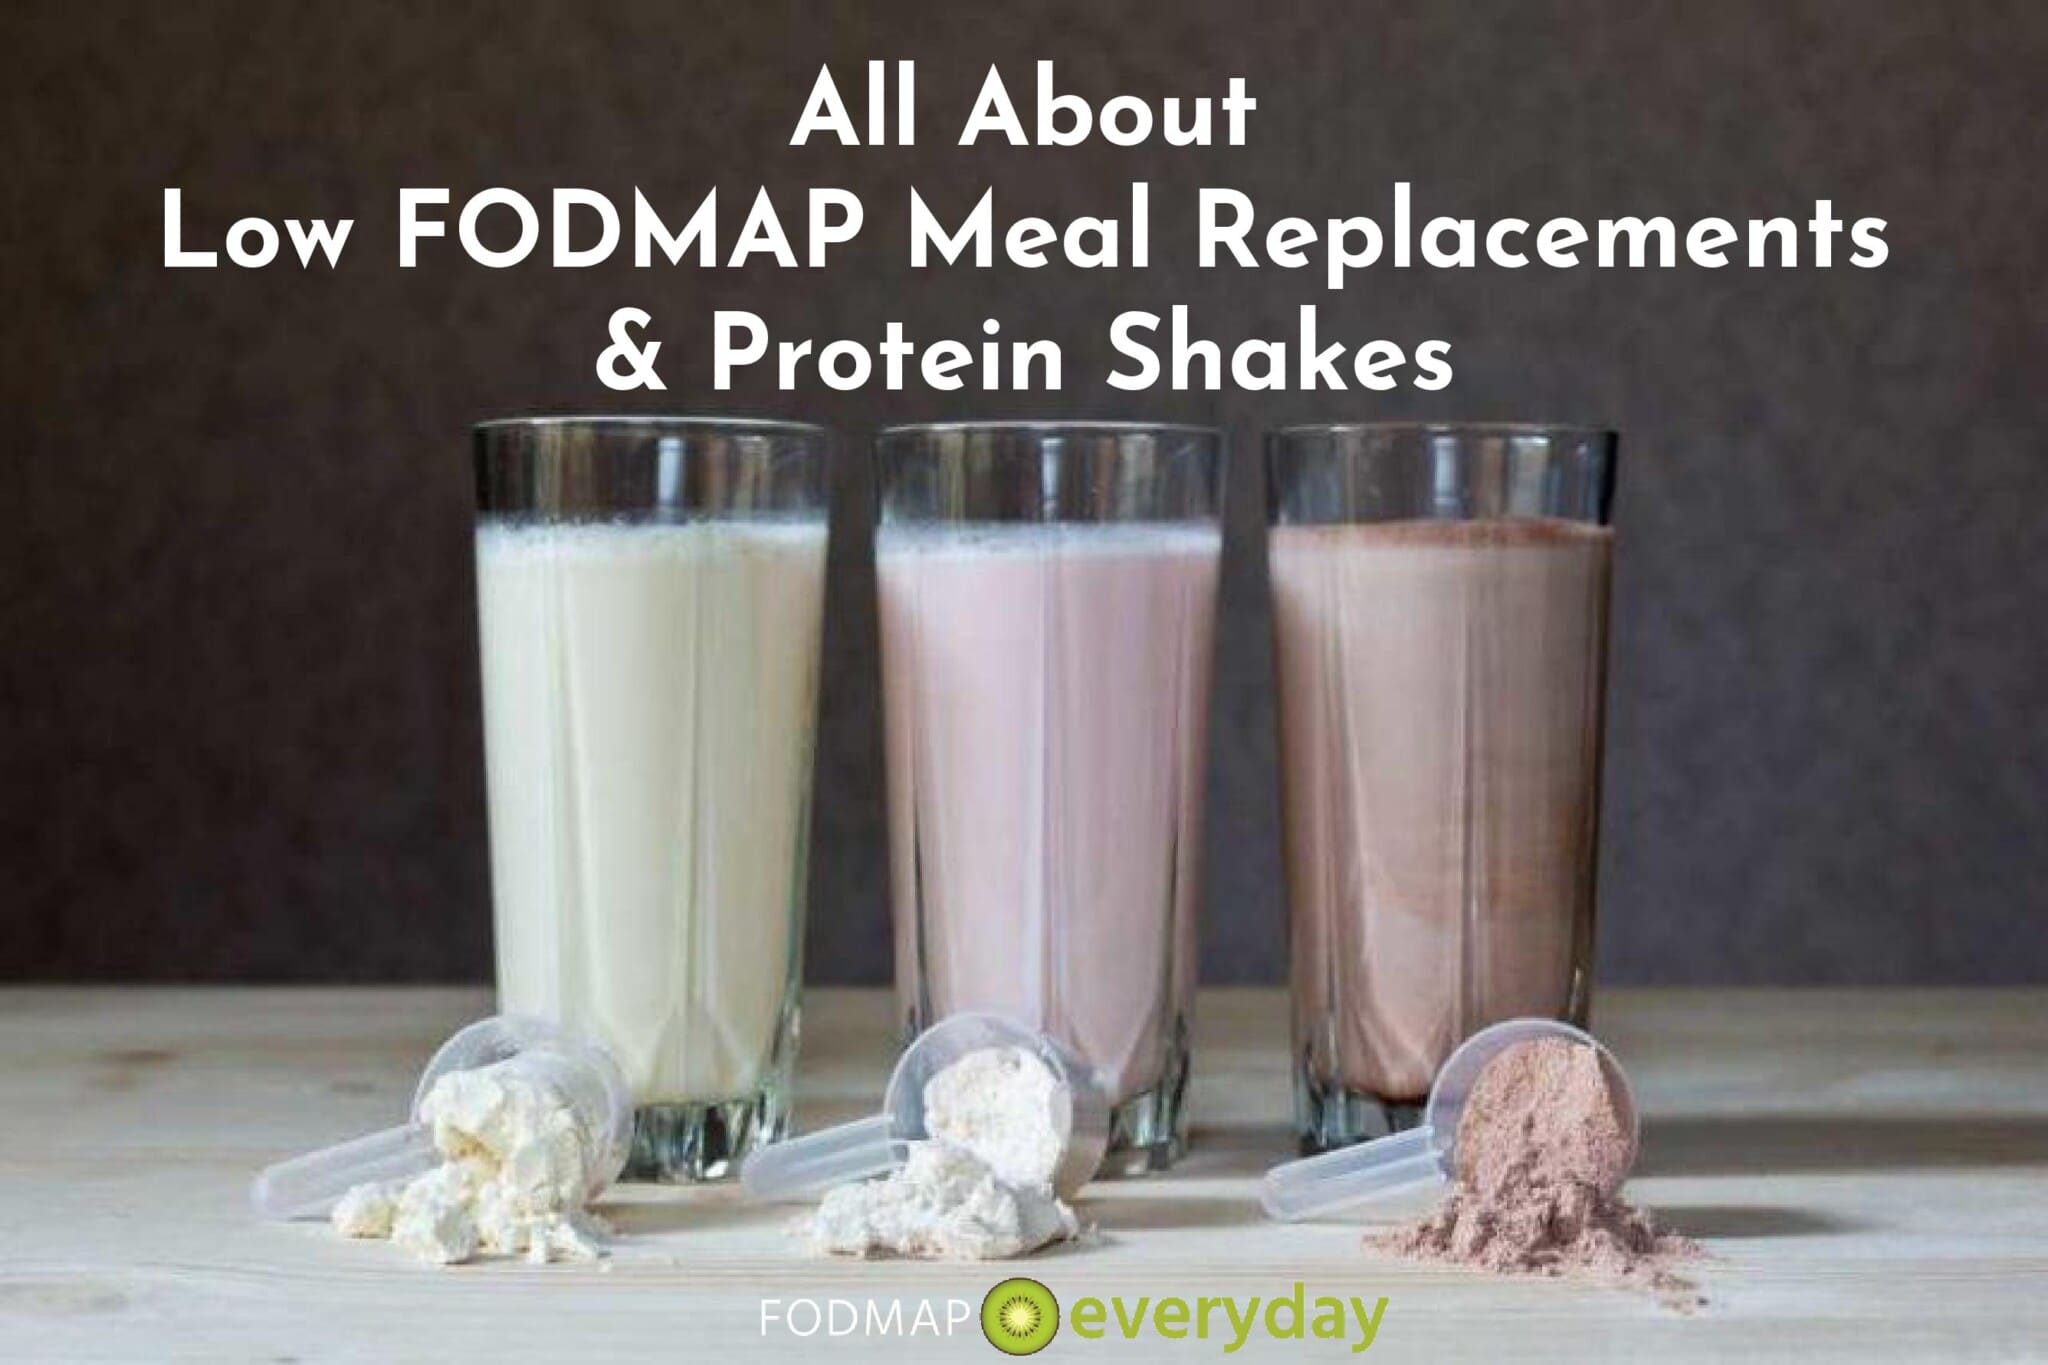 Low FODMAP Diet - FODMAP Everyday